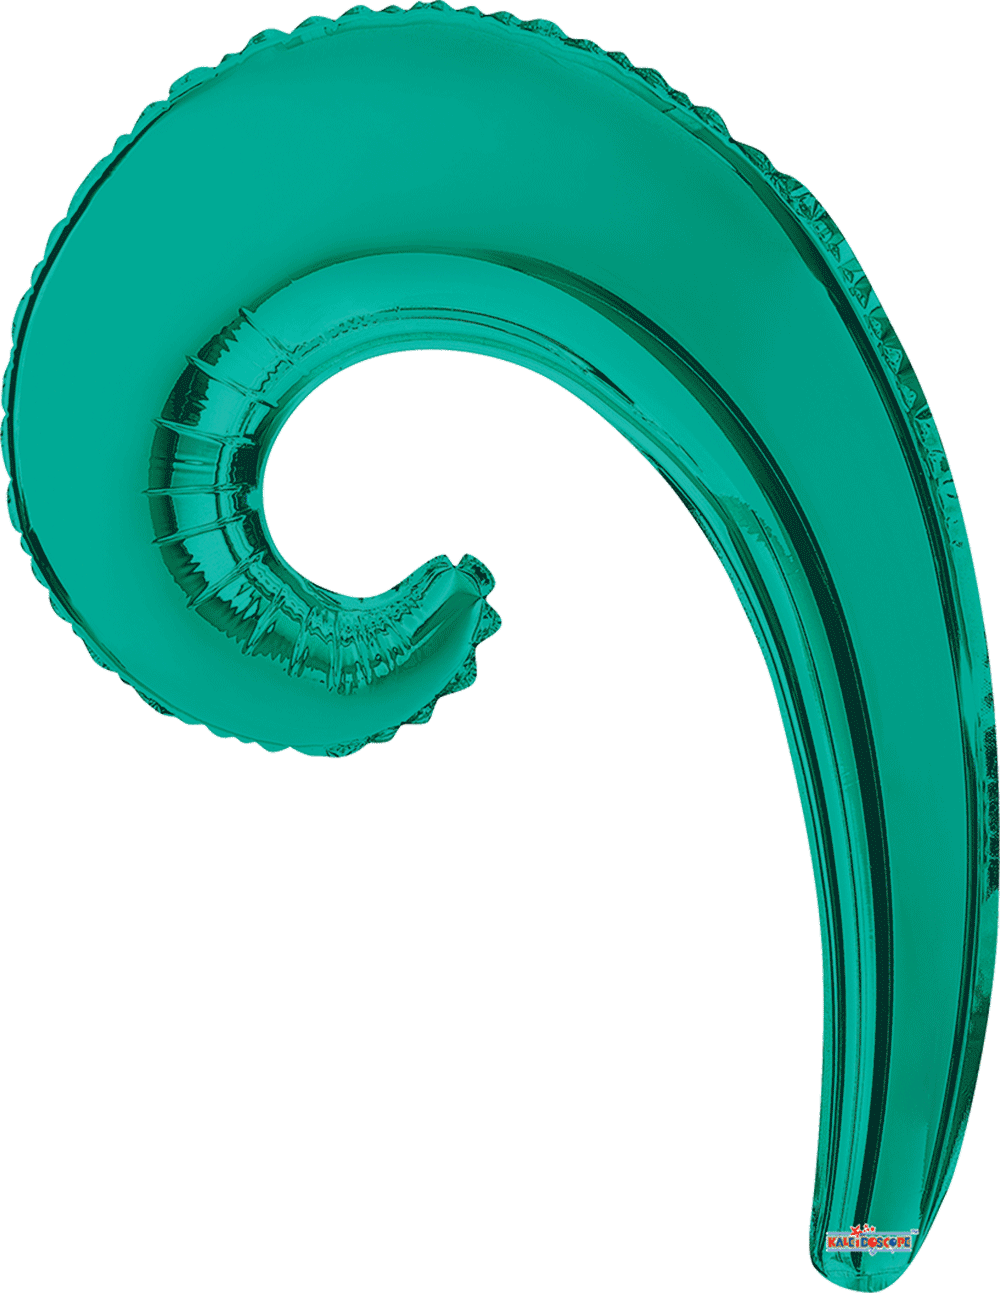 Kurly Wave Turquoise Green